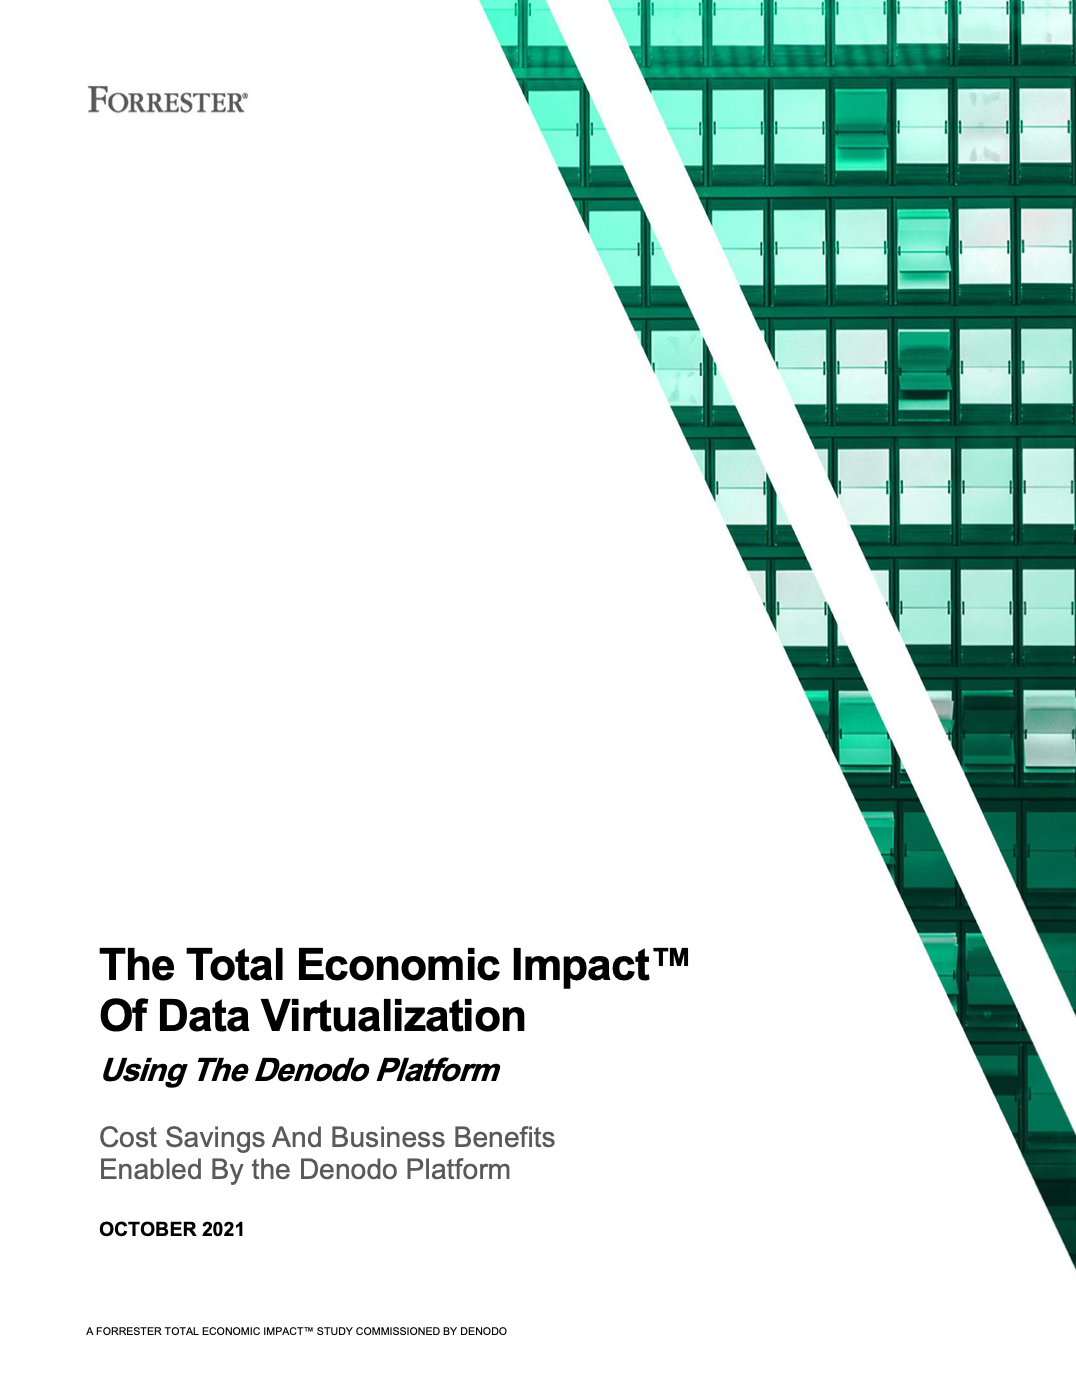 Forrester Study: The Total Economic Impact™ of Data Virtualization Using The Denodo Platform